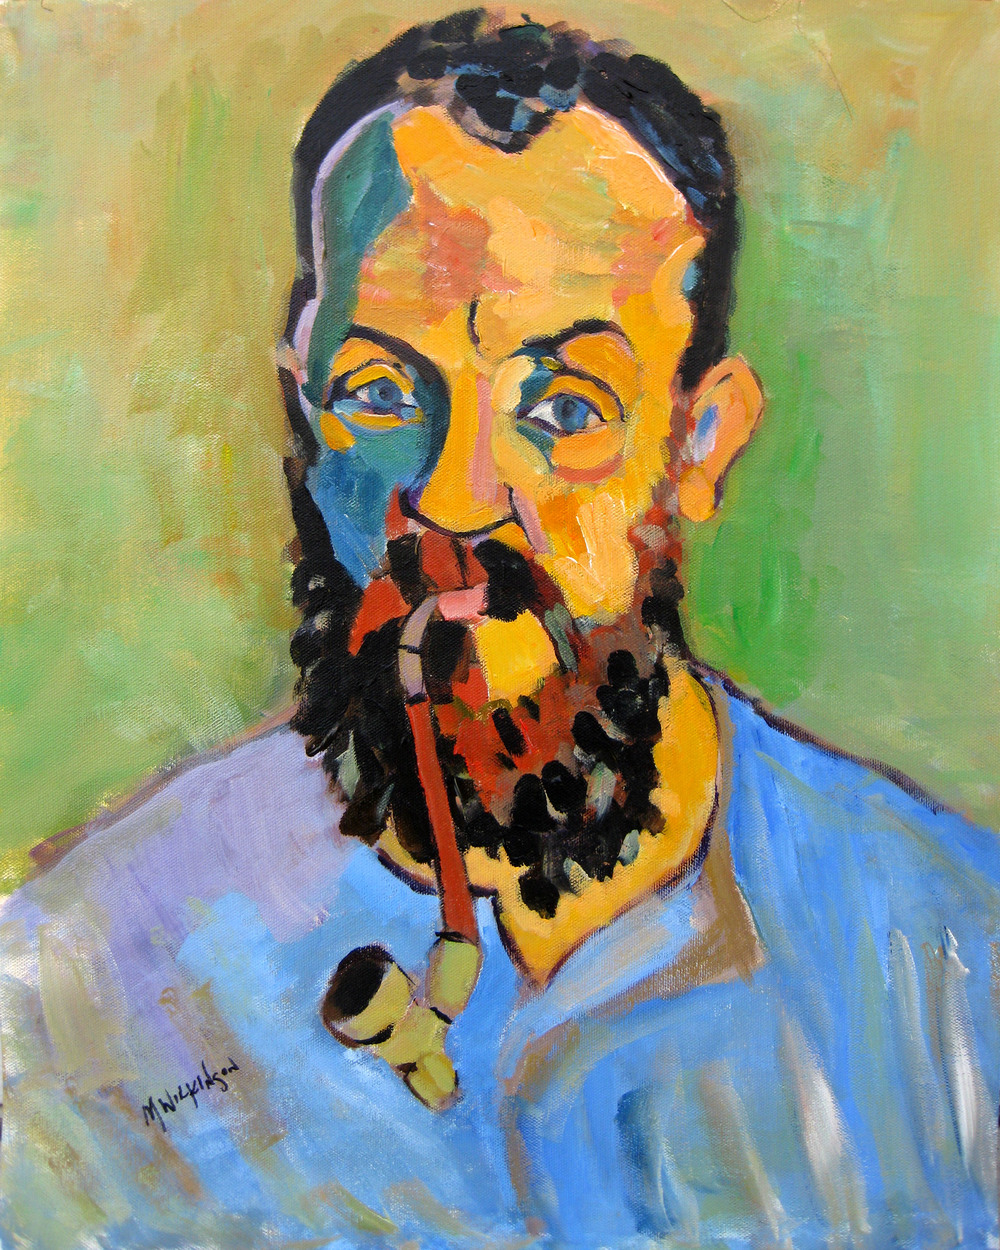 Henri Matisse - December 31, 1869 - November 3, 1954